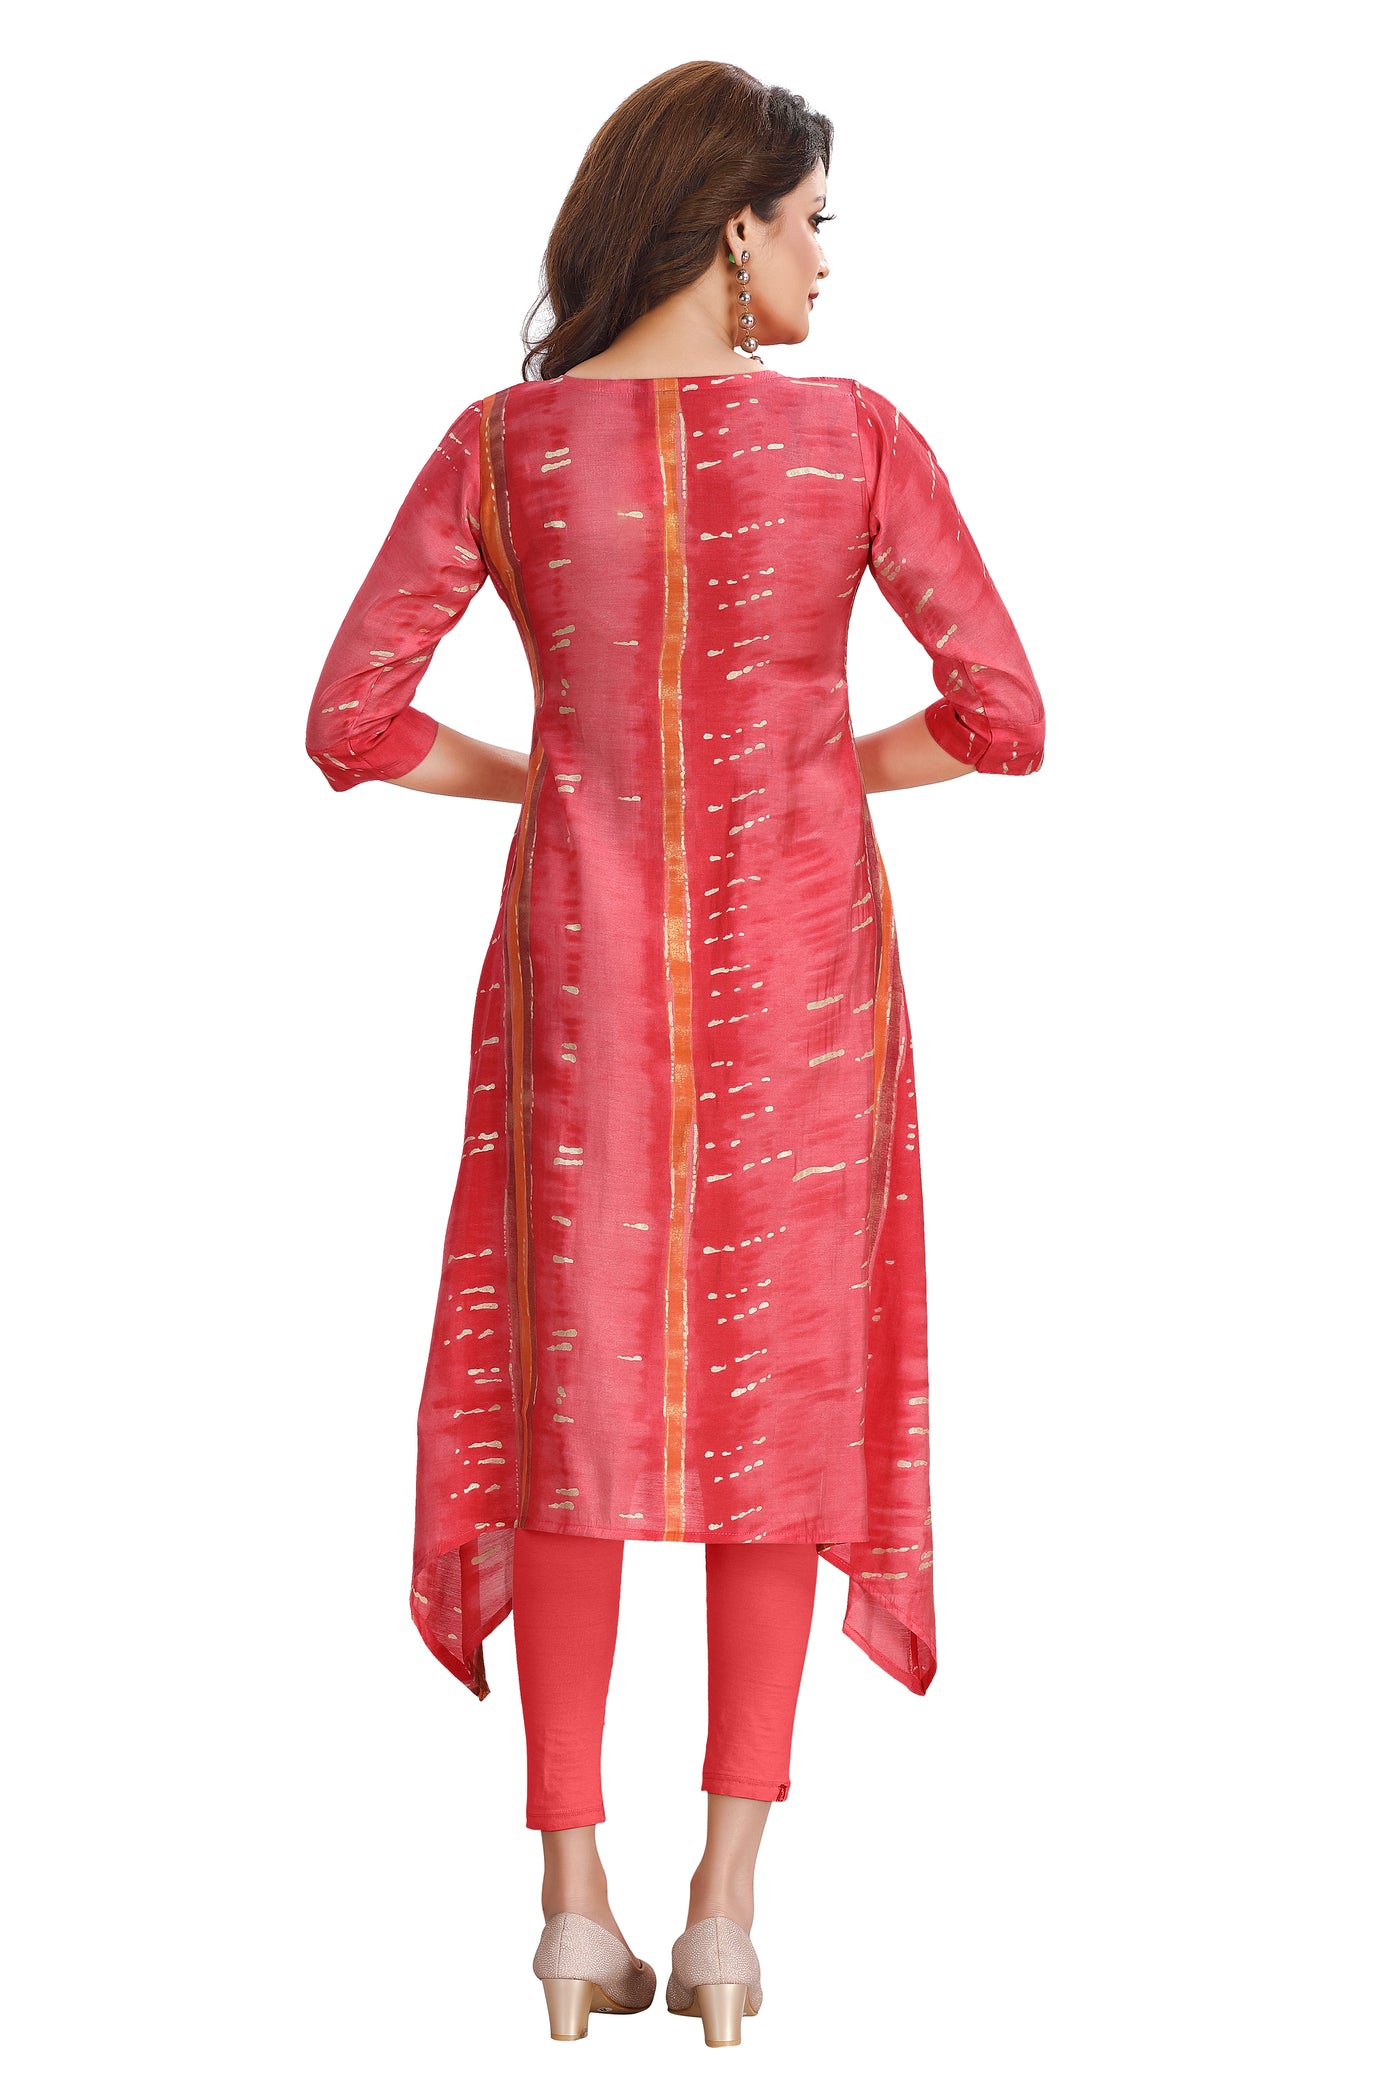 CORAL RED A-LINE KURTI - Sakkhi Style